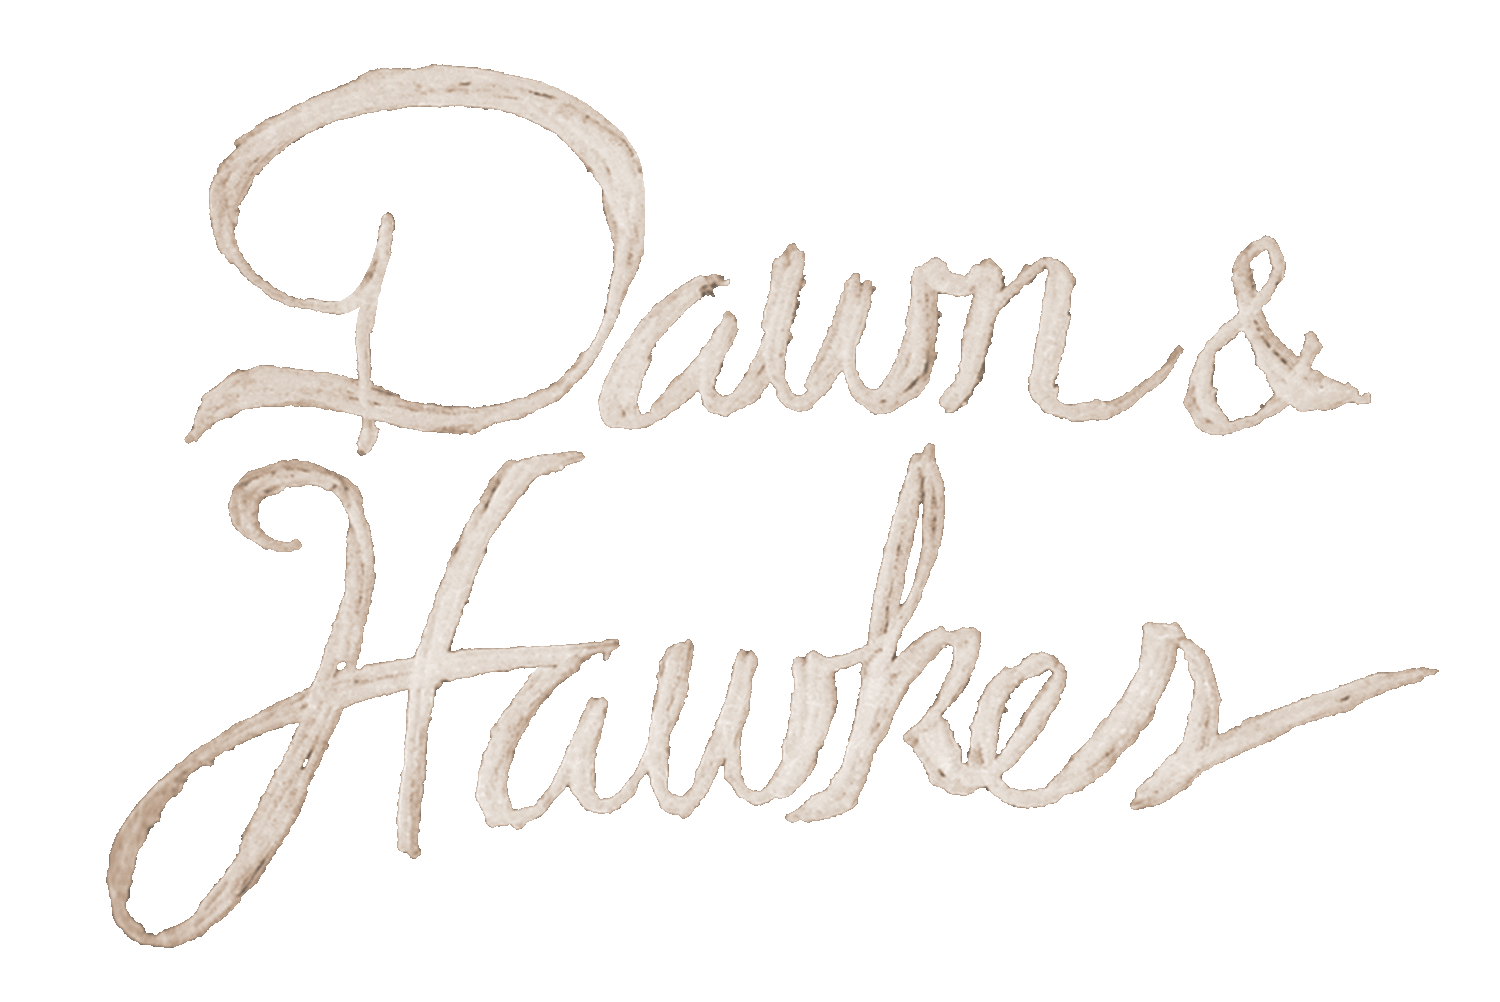 Dawn and Hawkes